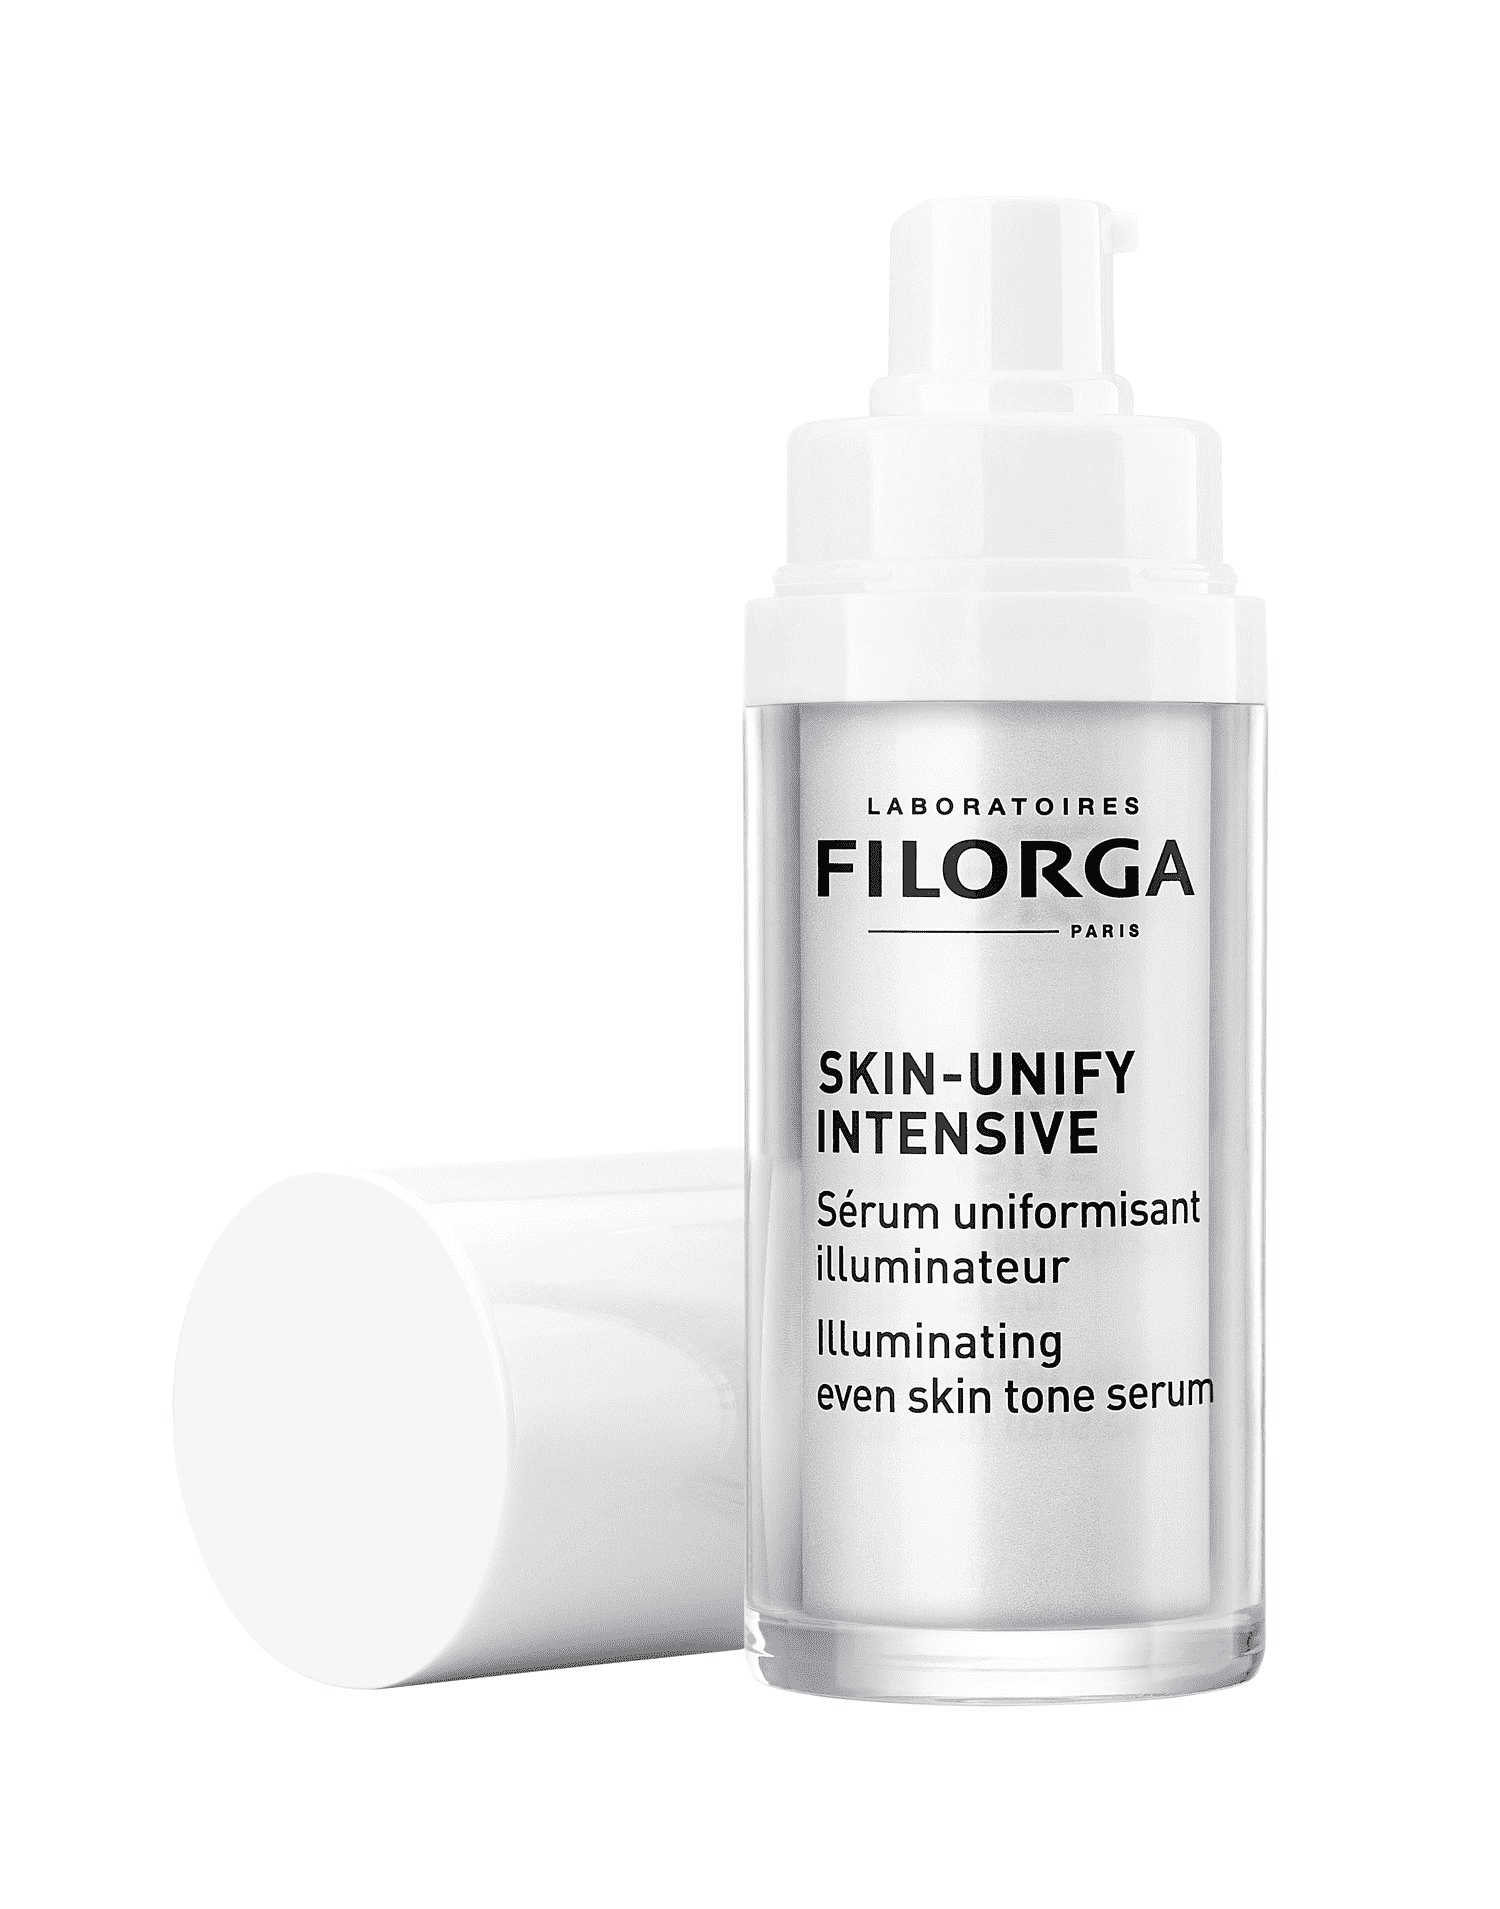 Filorga Skin-unify Intensive Siero Uniformante Illuminante 30ml